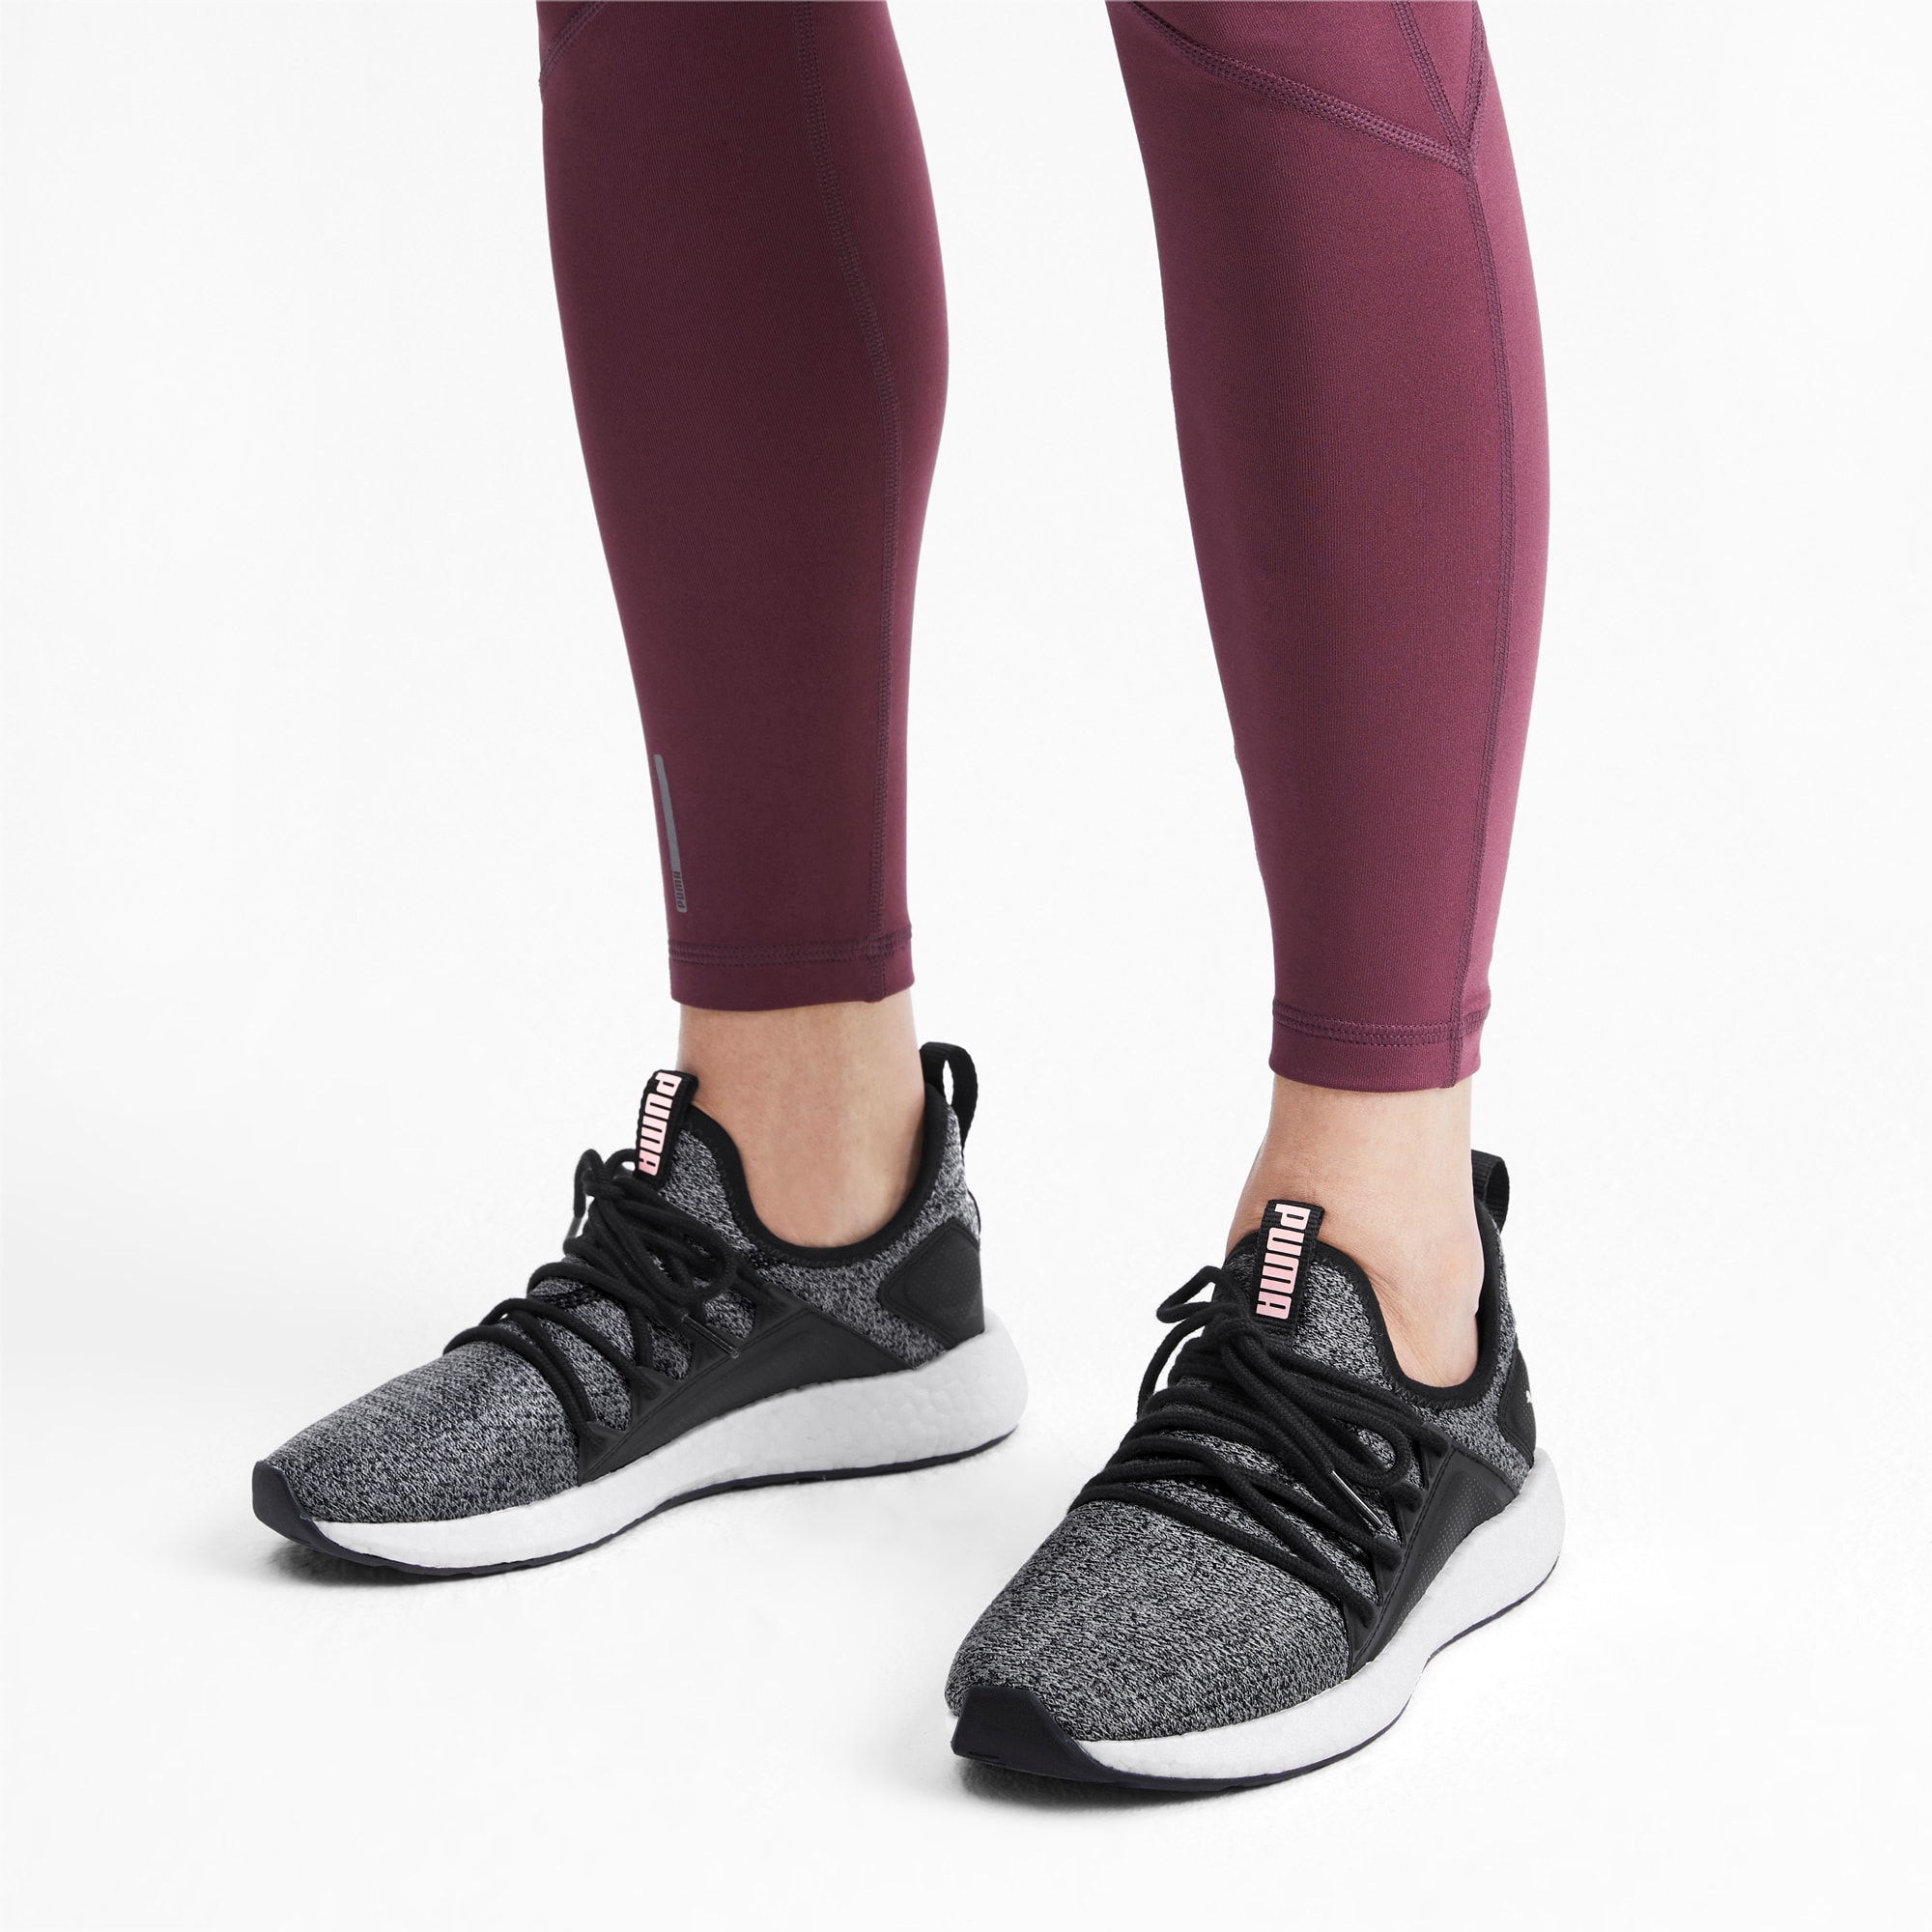 NRGY Neko Knit Women's Running Shoes 